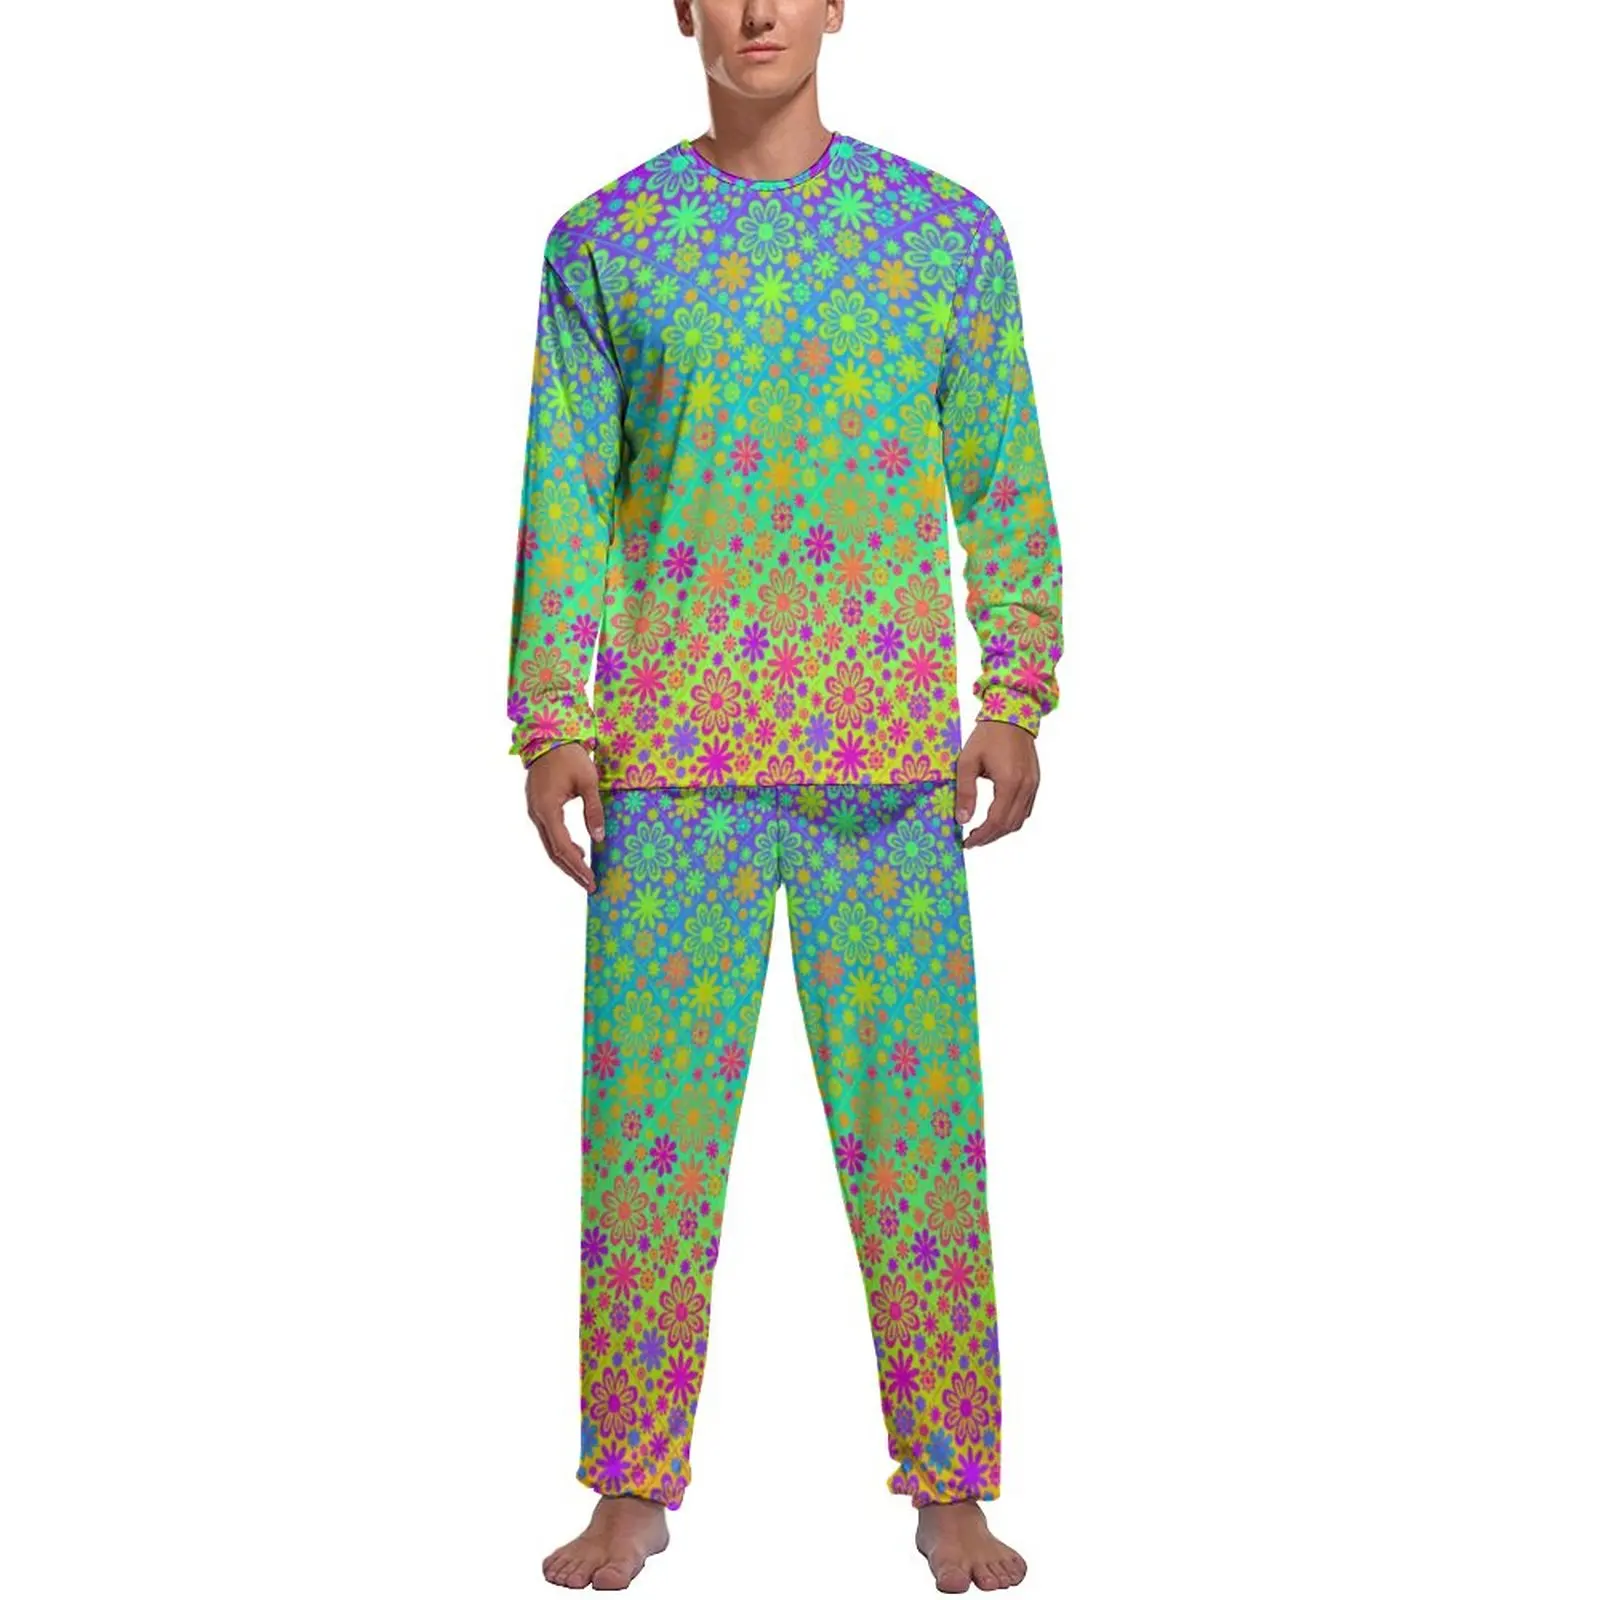 Groovy Daisy Print Pajamas Spring Retro Ombre Sleep Sleepwear Male 2 Pieces Graphic Long Sleeves Romantic Pajama Sets